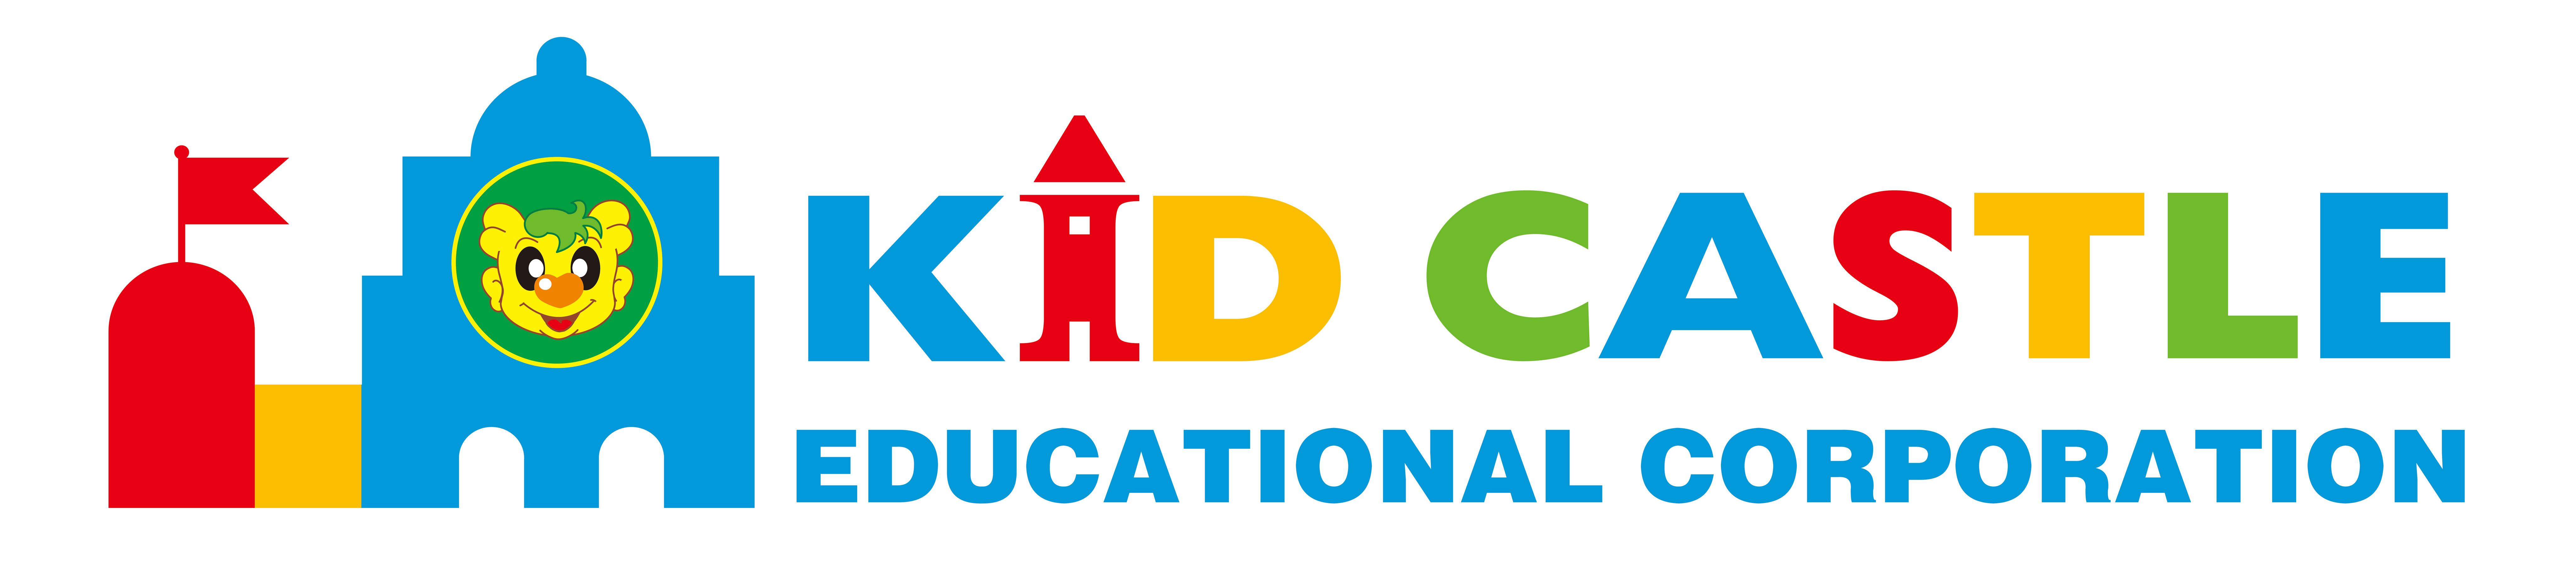 Kid Castle Educational Corporation